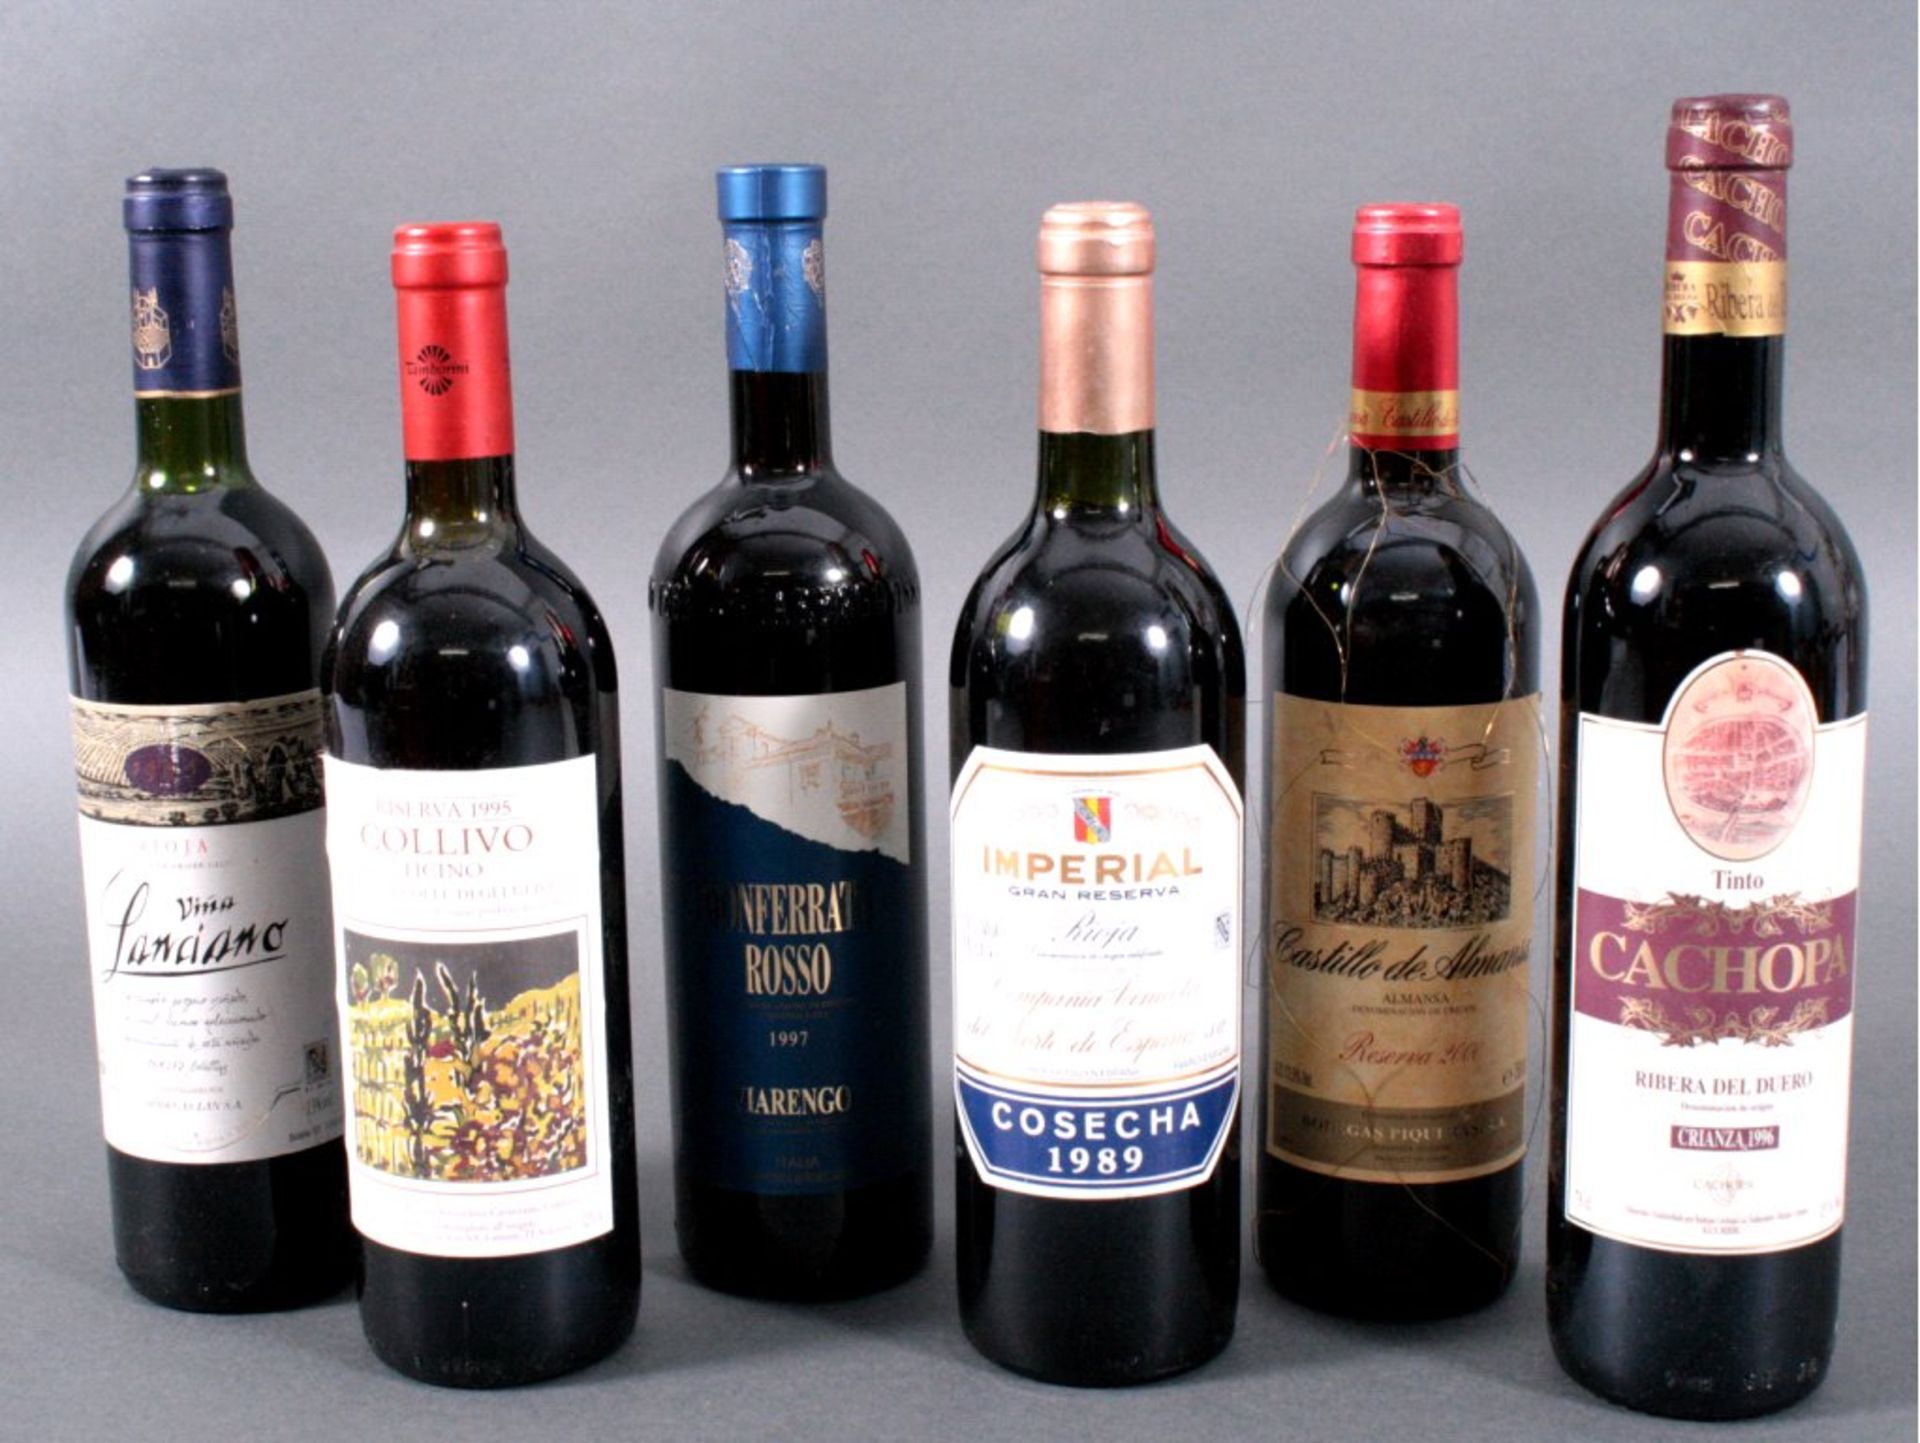 6 Flaschen Rotwein1x 1995 Vina Lawciano, Rioja.1x 1989 Imperial, Gran Reserva, Rioja.1x 1995 Collivo